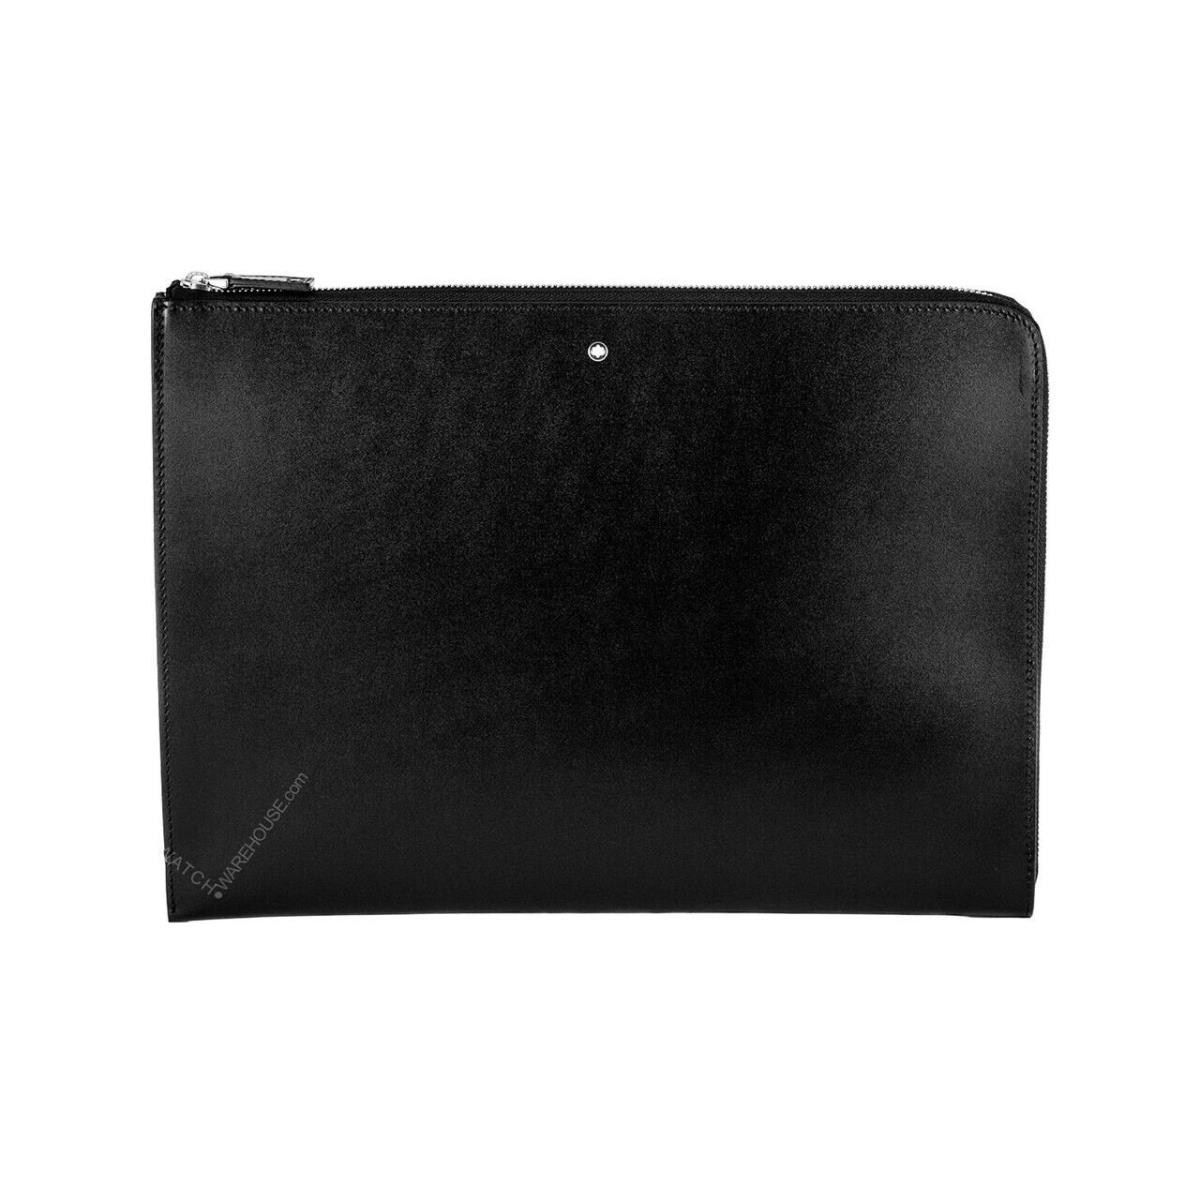 Montblanc Meisterstuck Portfolio Zip Black Leather Business Bag 114519